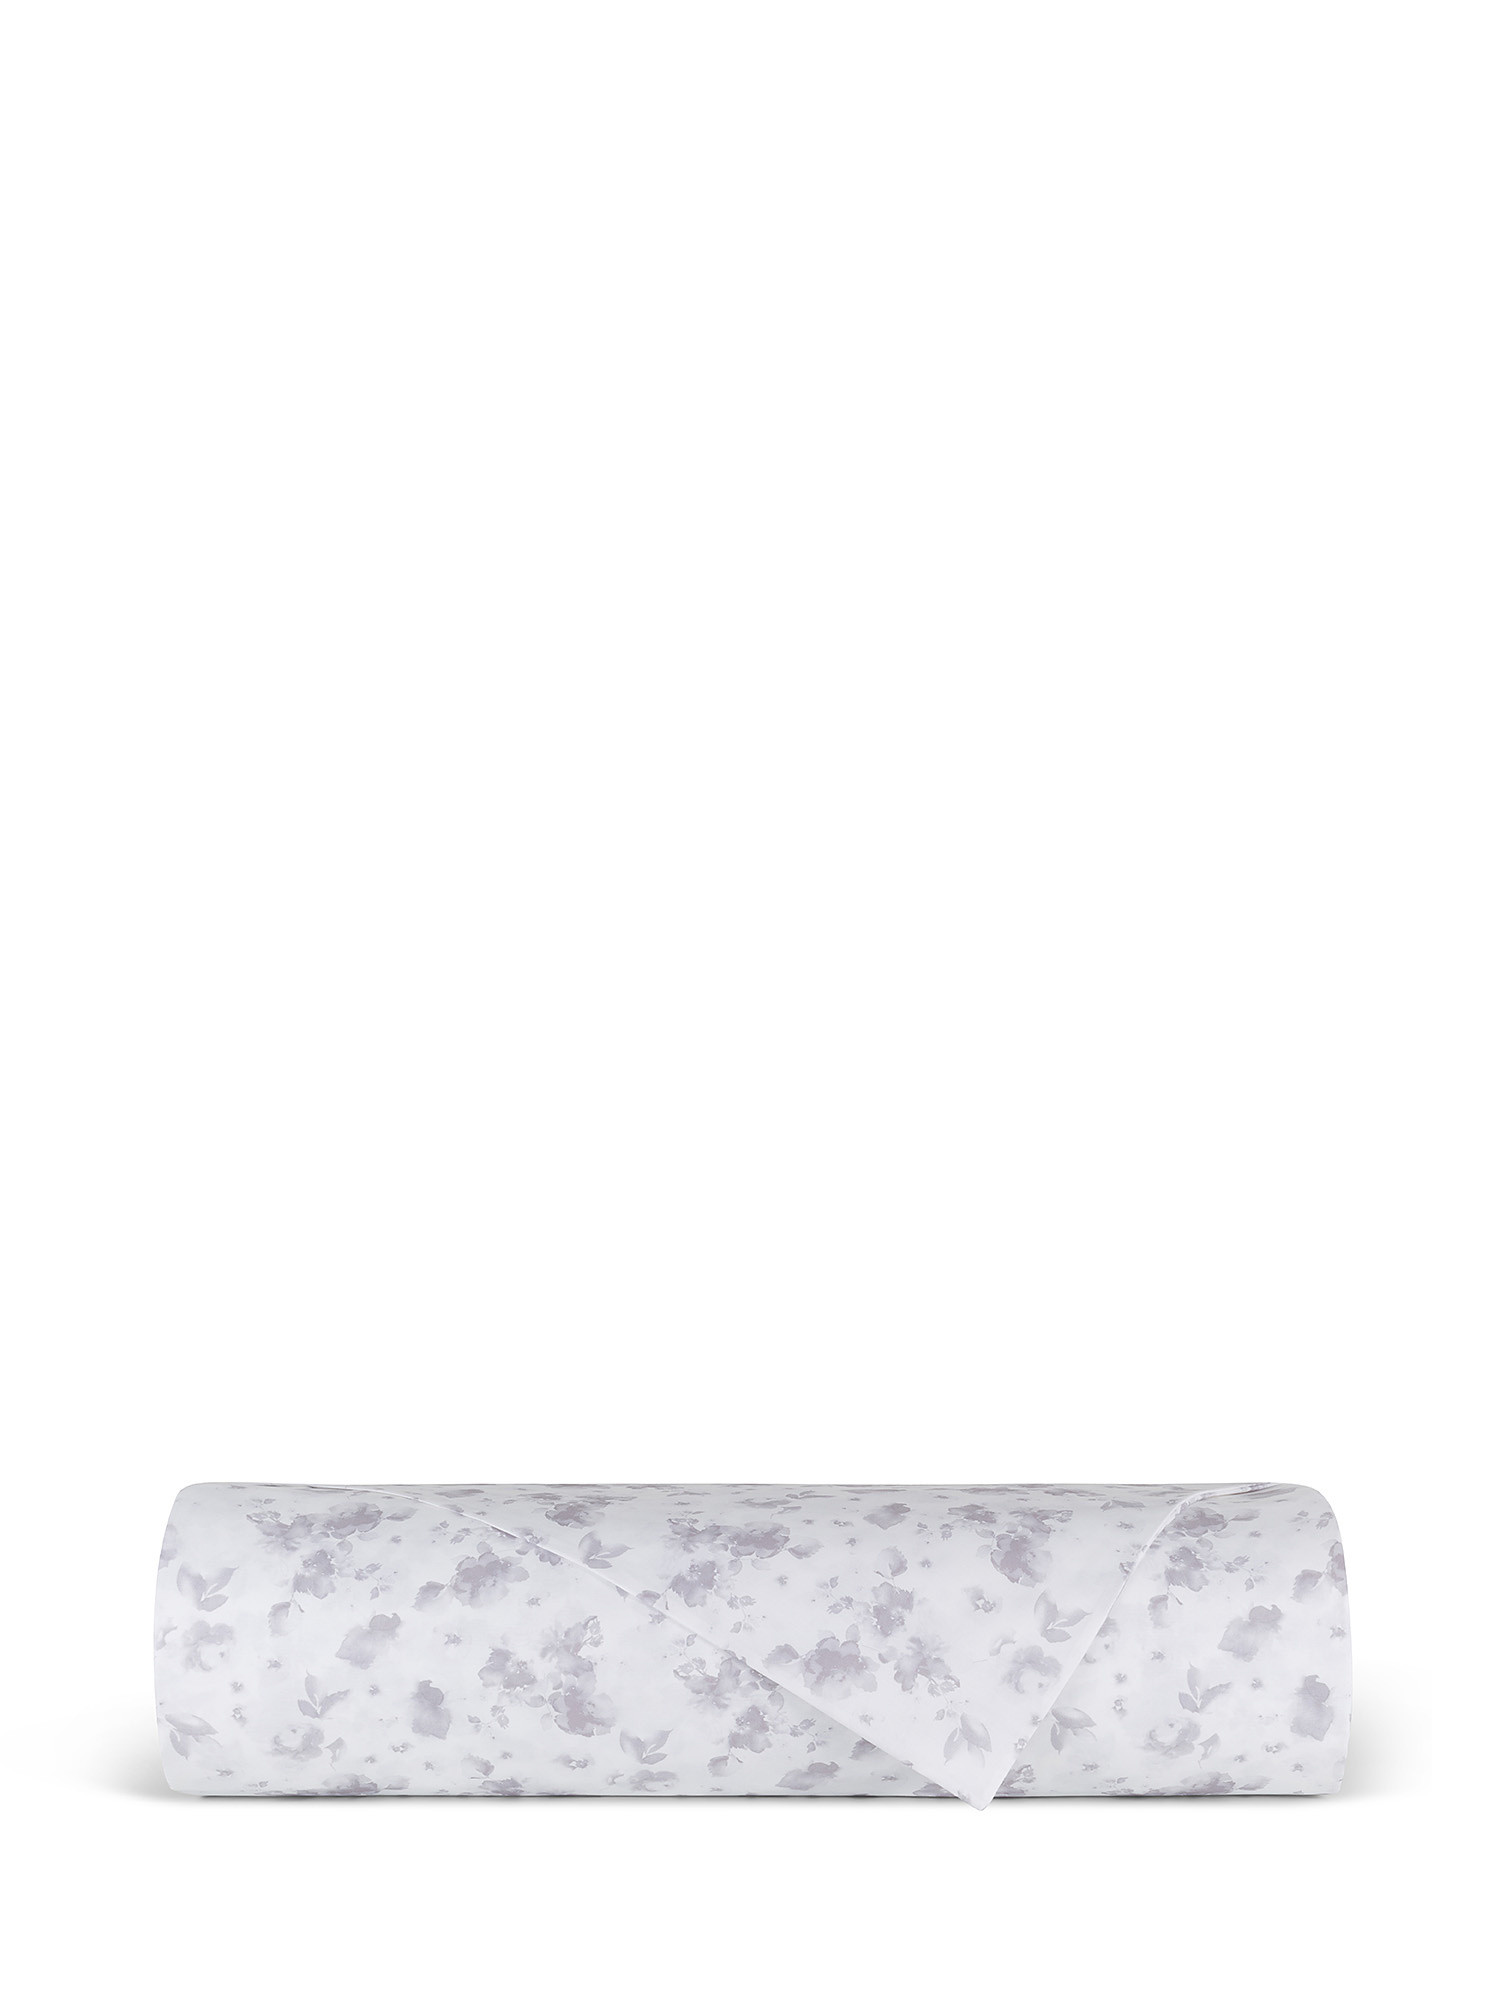 Copripiumino cotone percalle motivo floreale Portofino, Bianco, large image number 1